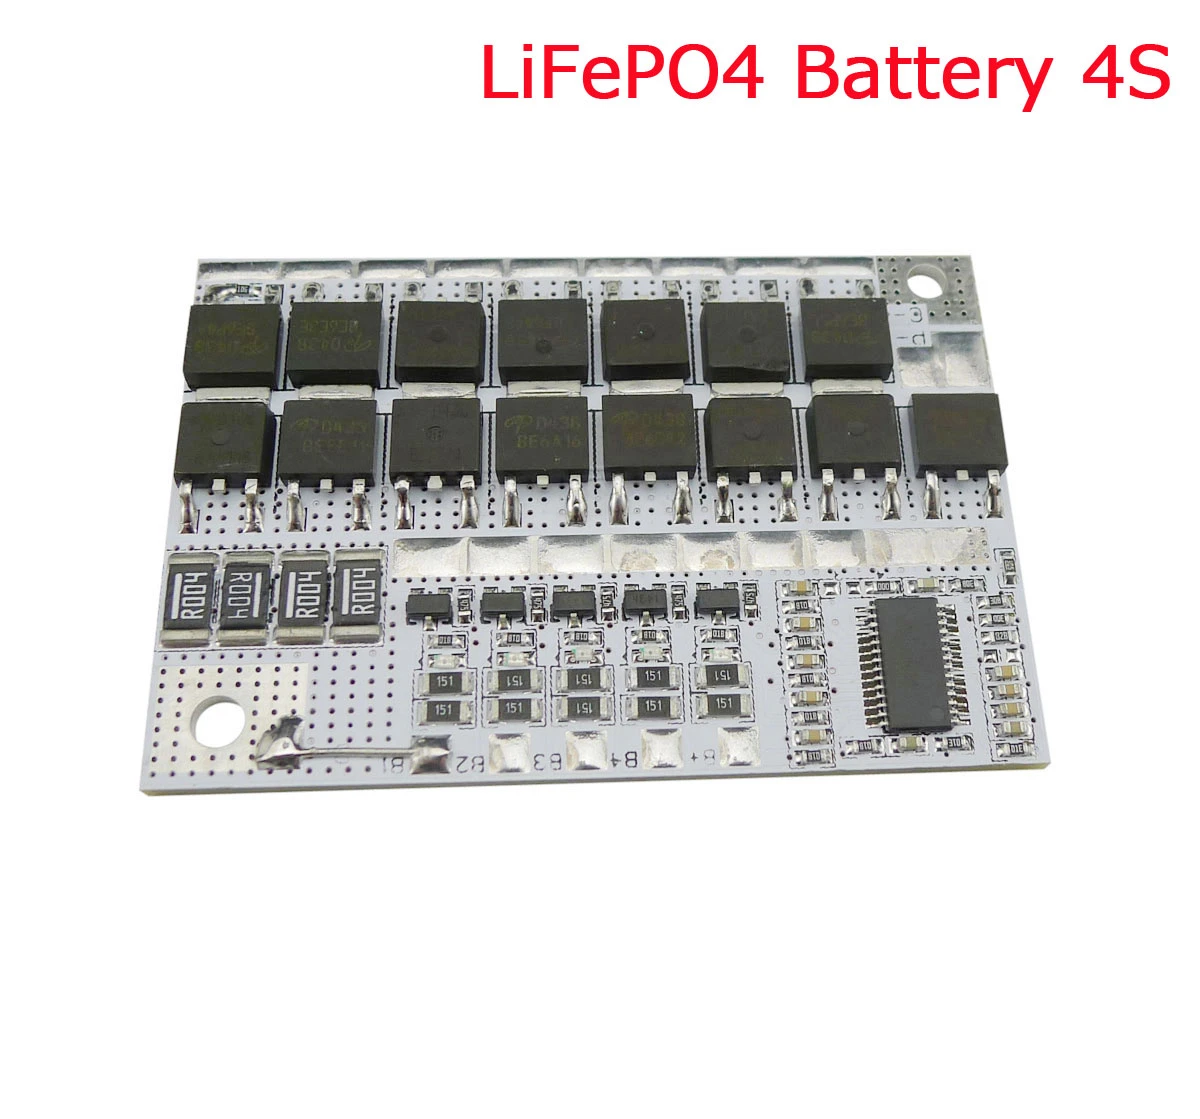 Aihasd 14.4V 100A 4S BMS LiFePO4 LiFe Battery Protection Circuit Board